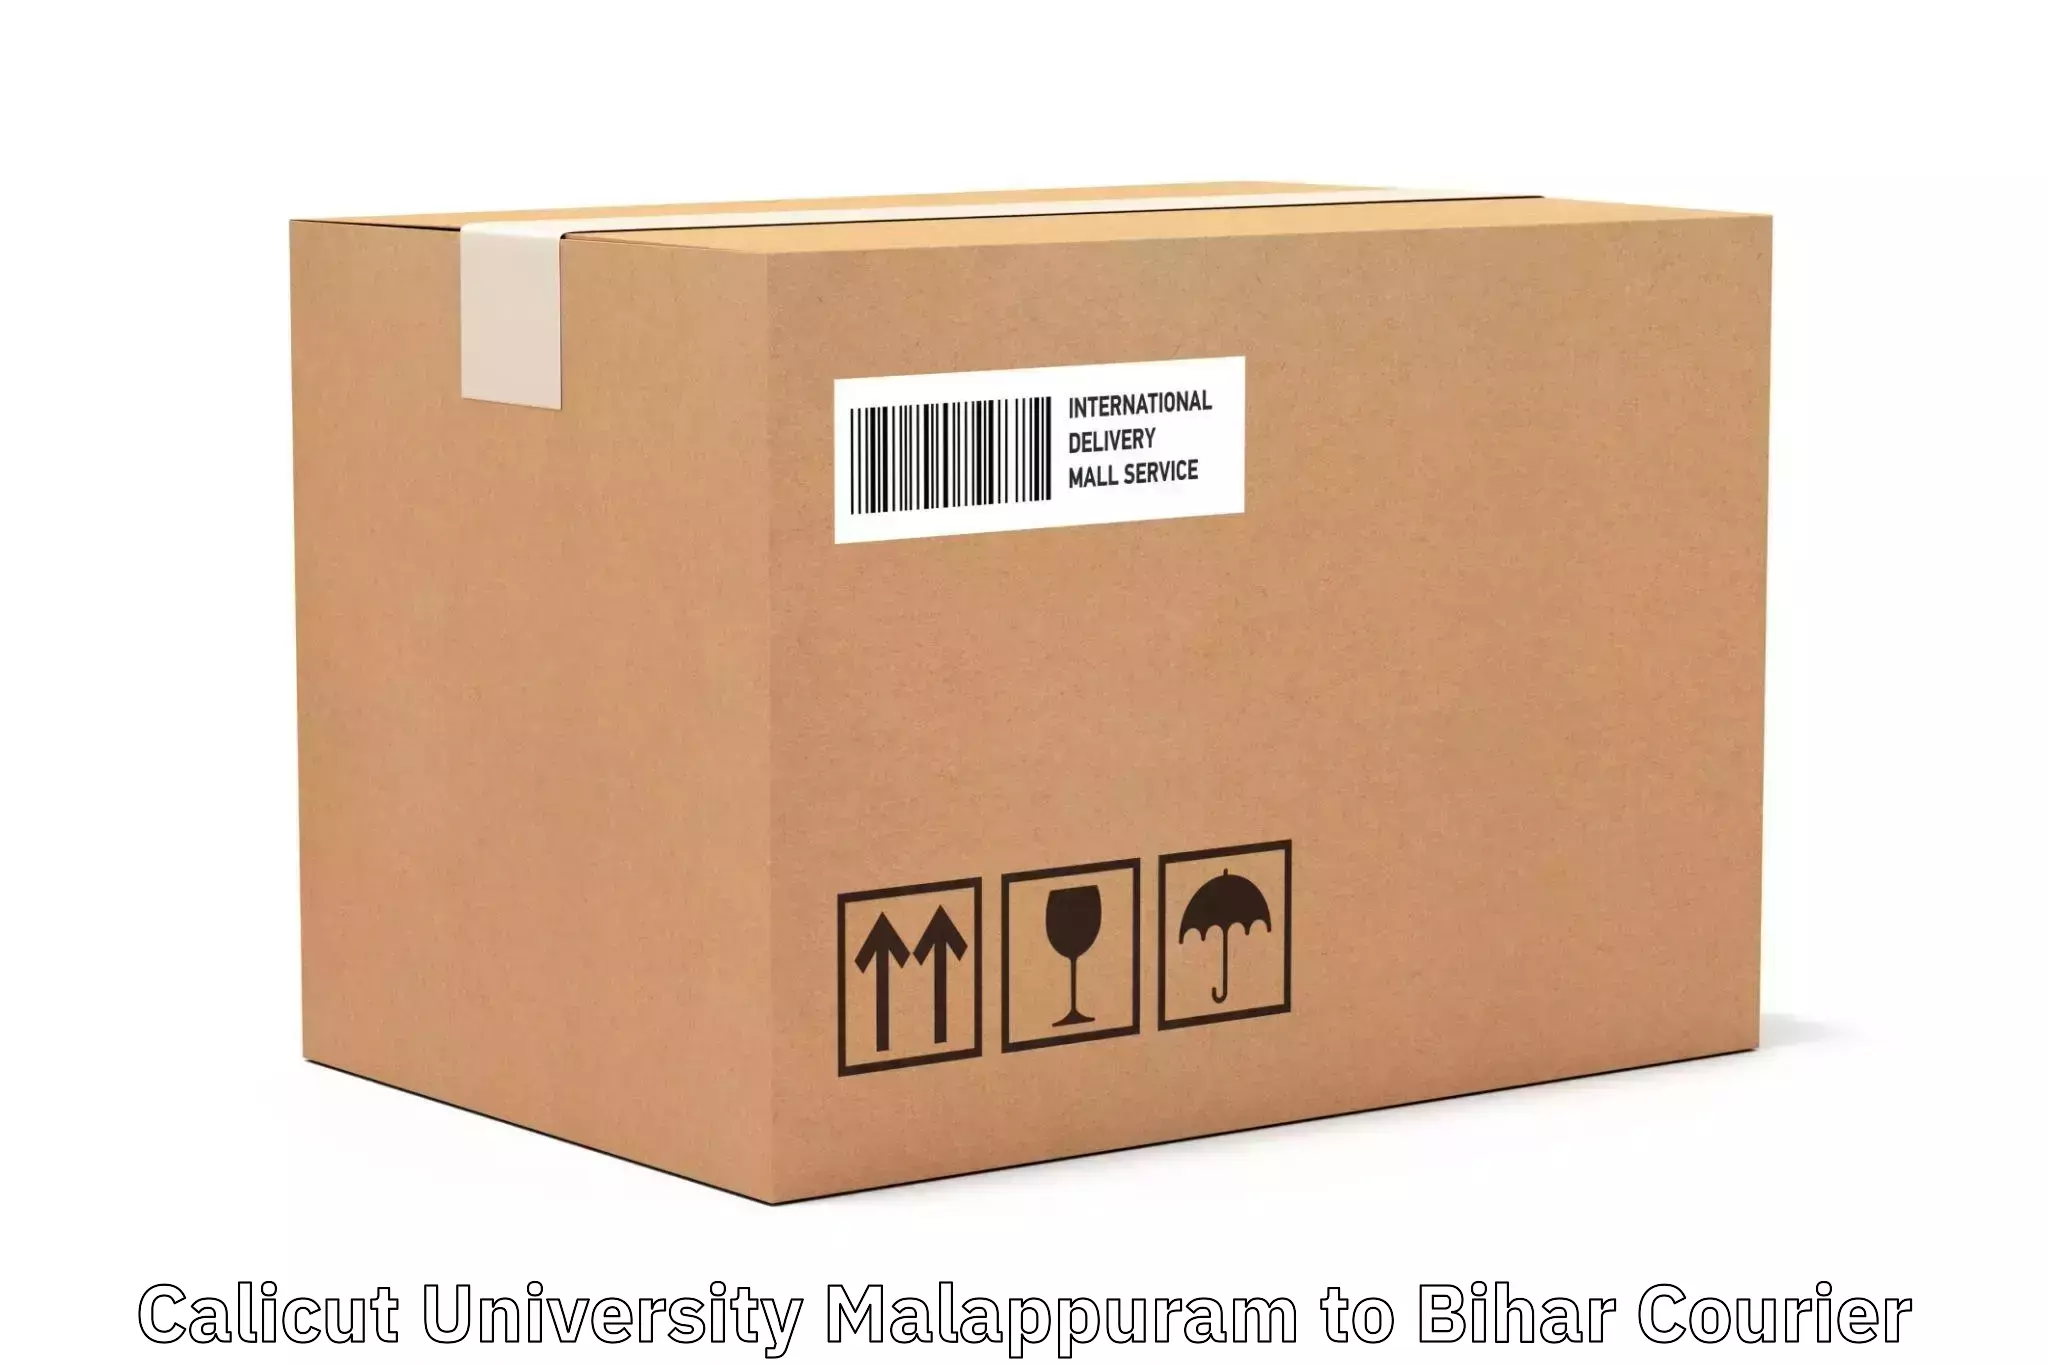 Heavy parcel delivery Calicut University Malappuram to Minapur